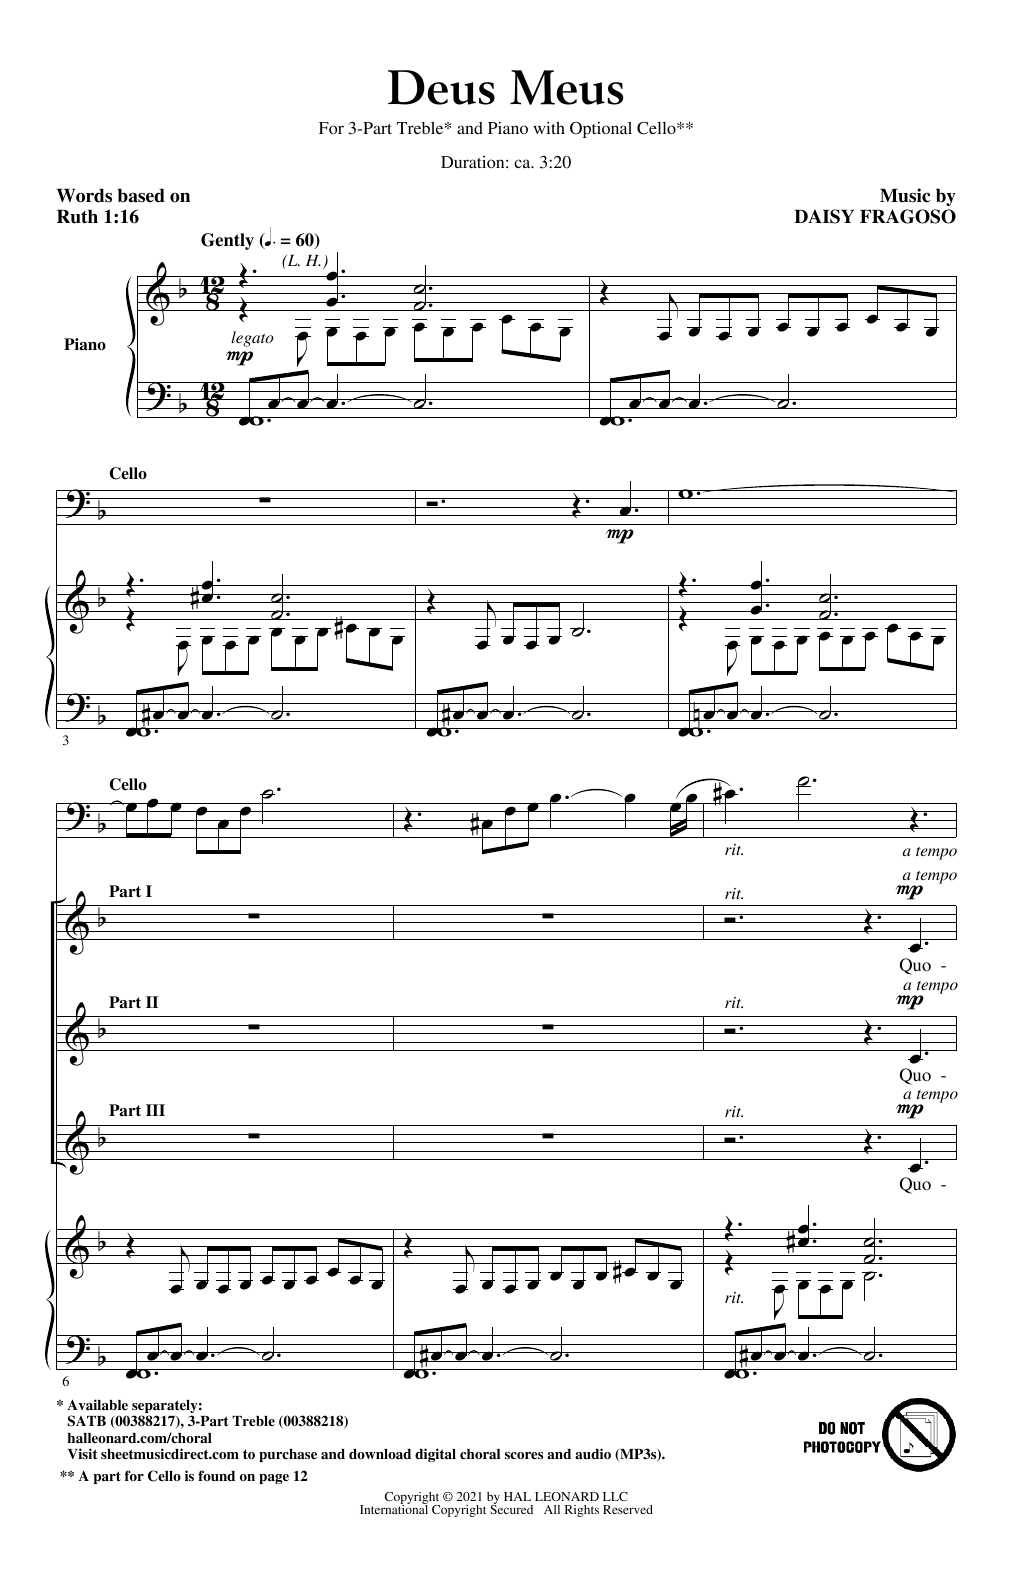 Daisy Fragoso Deus Meus Sheet Music Notes & Chords for 3-Part Treble Choir - Download or Print PDF